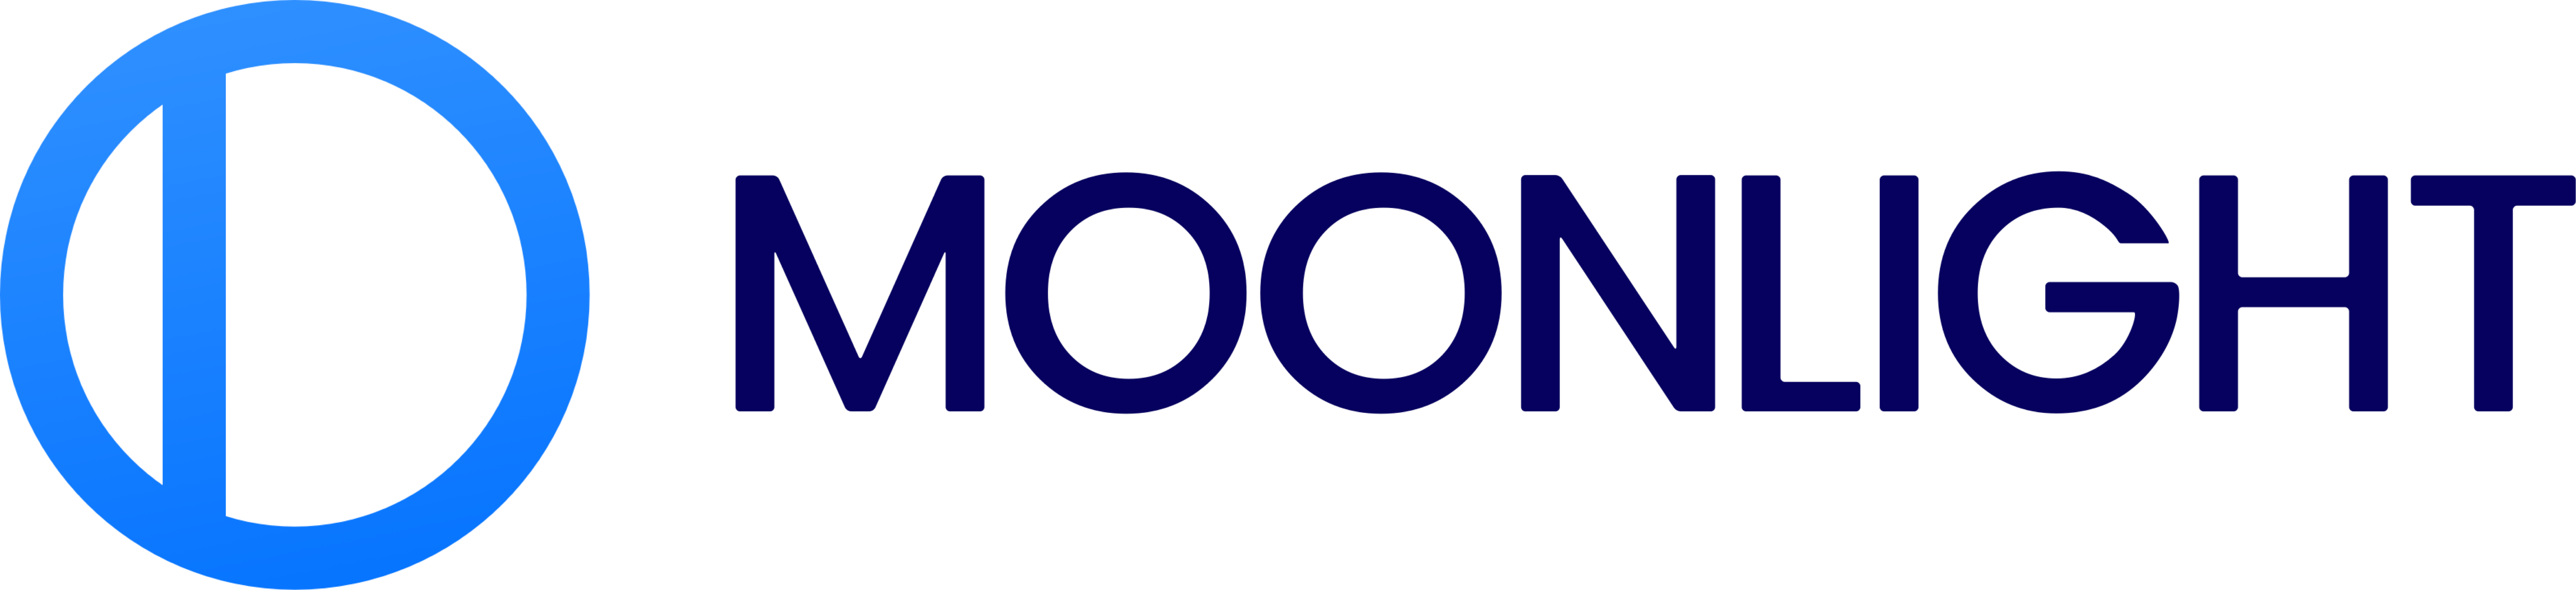 Moonlight Logo (8360x1915), Png Download